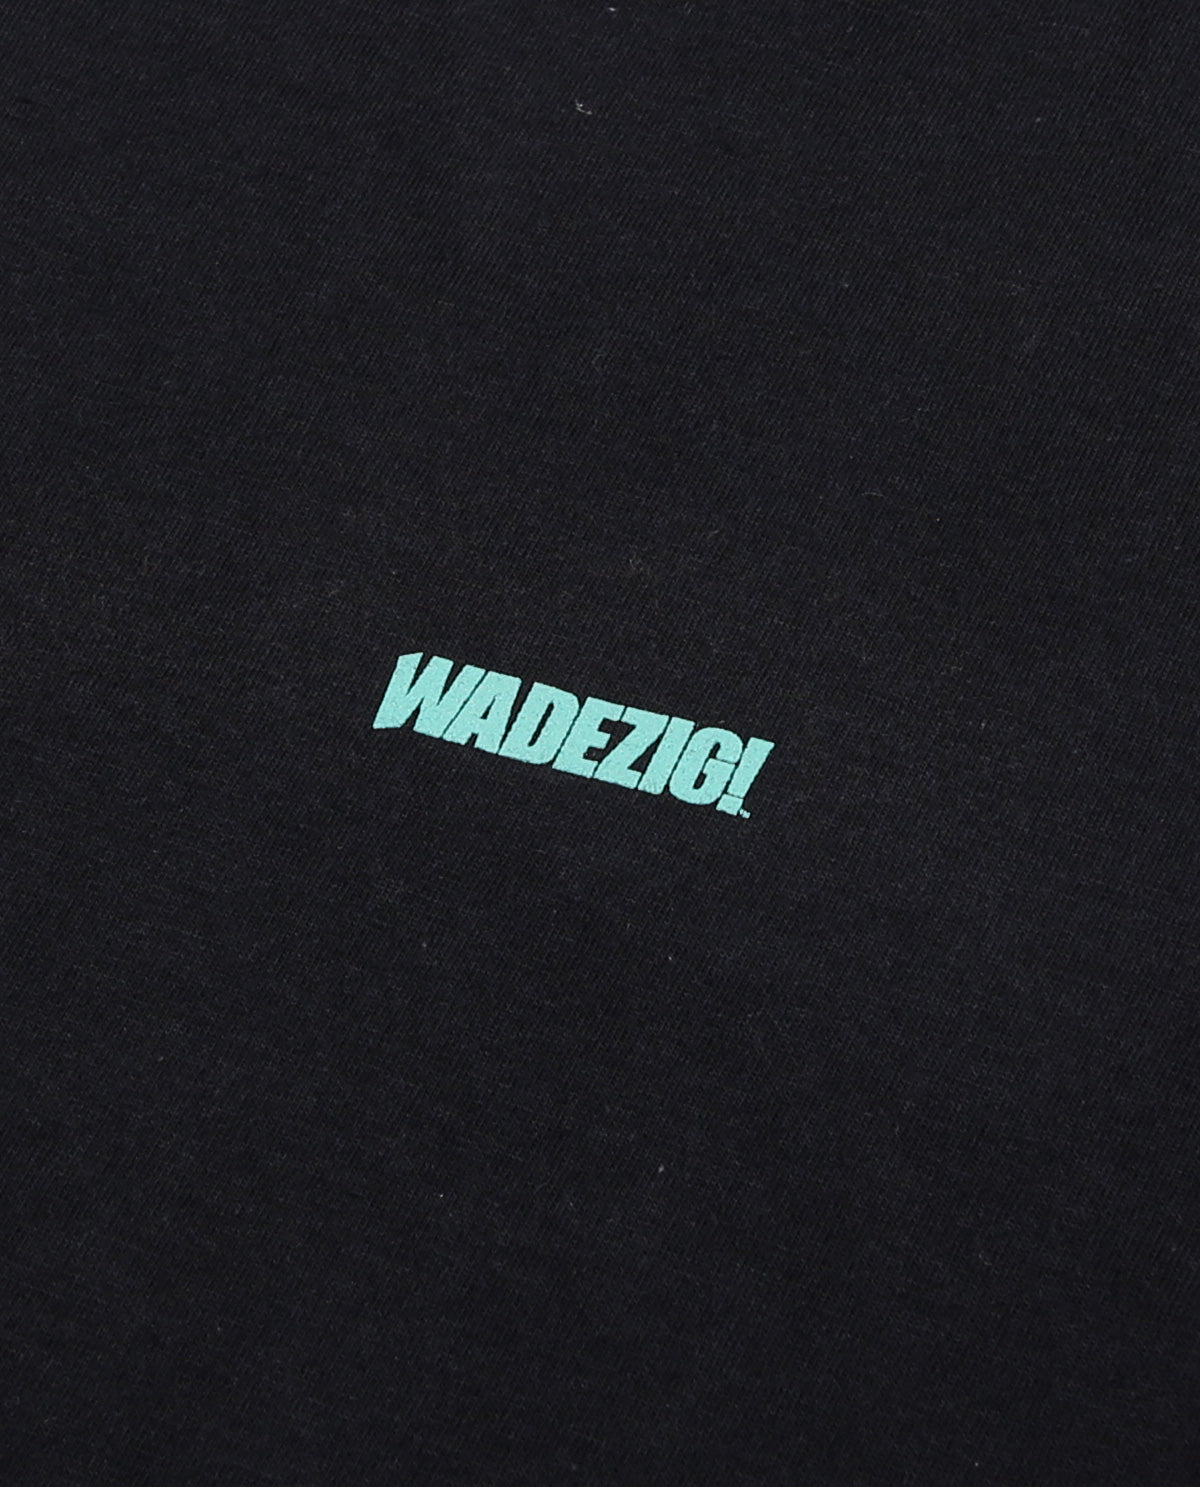 Wadezig! T-Shirt - Layout LS Black